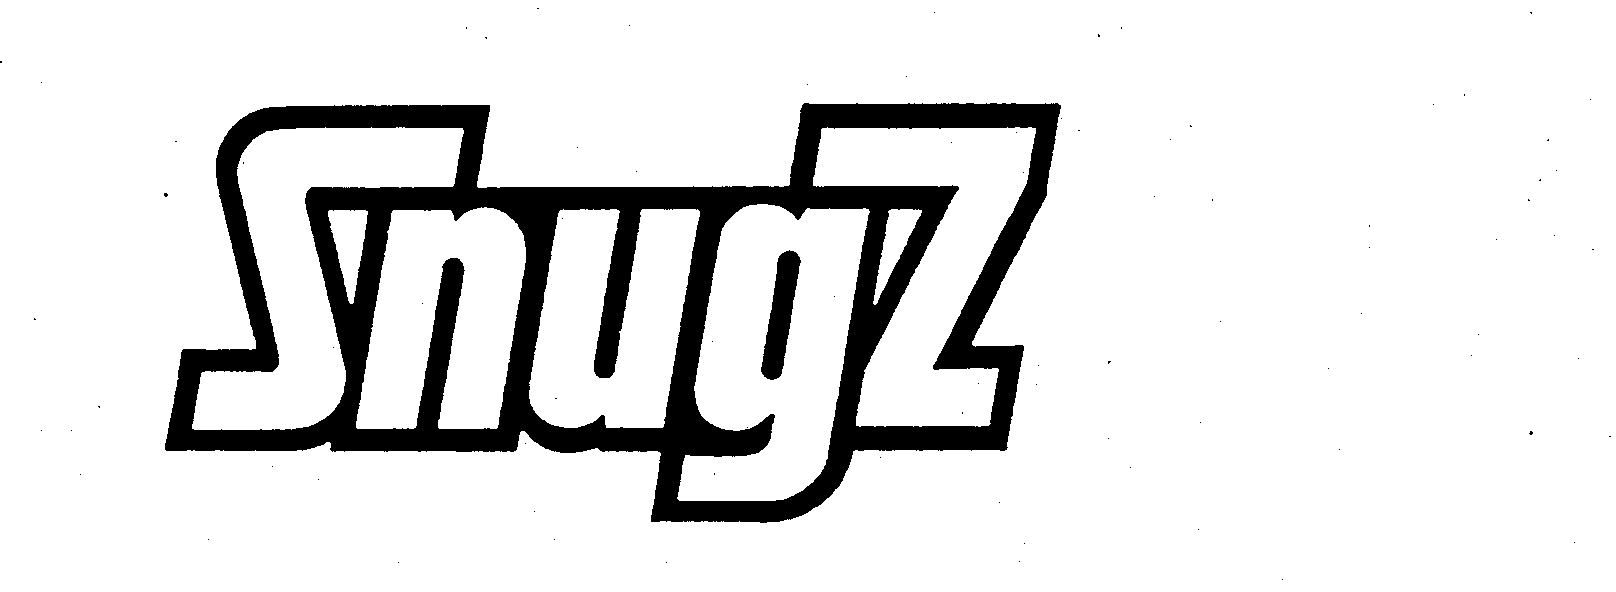 Trademark Logo SNUGZ